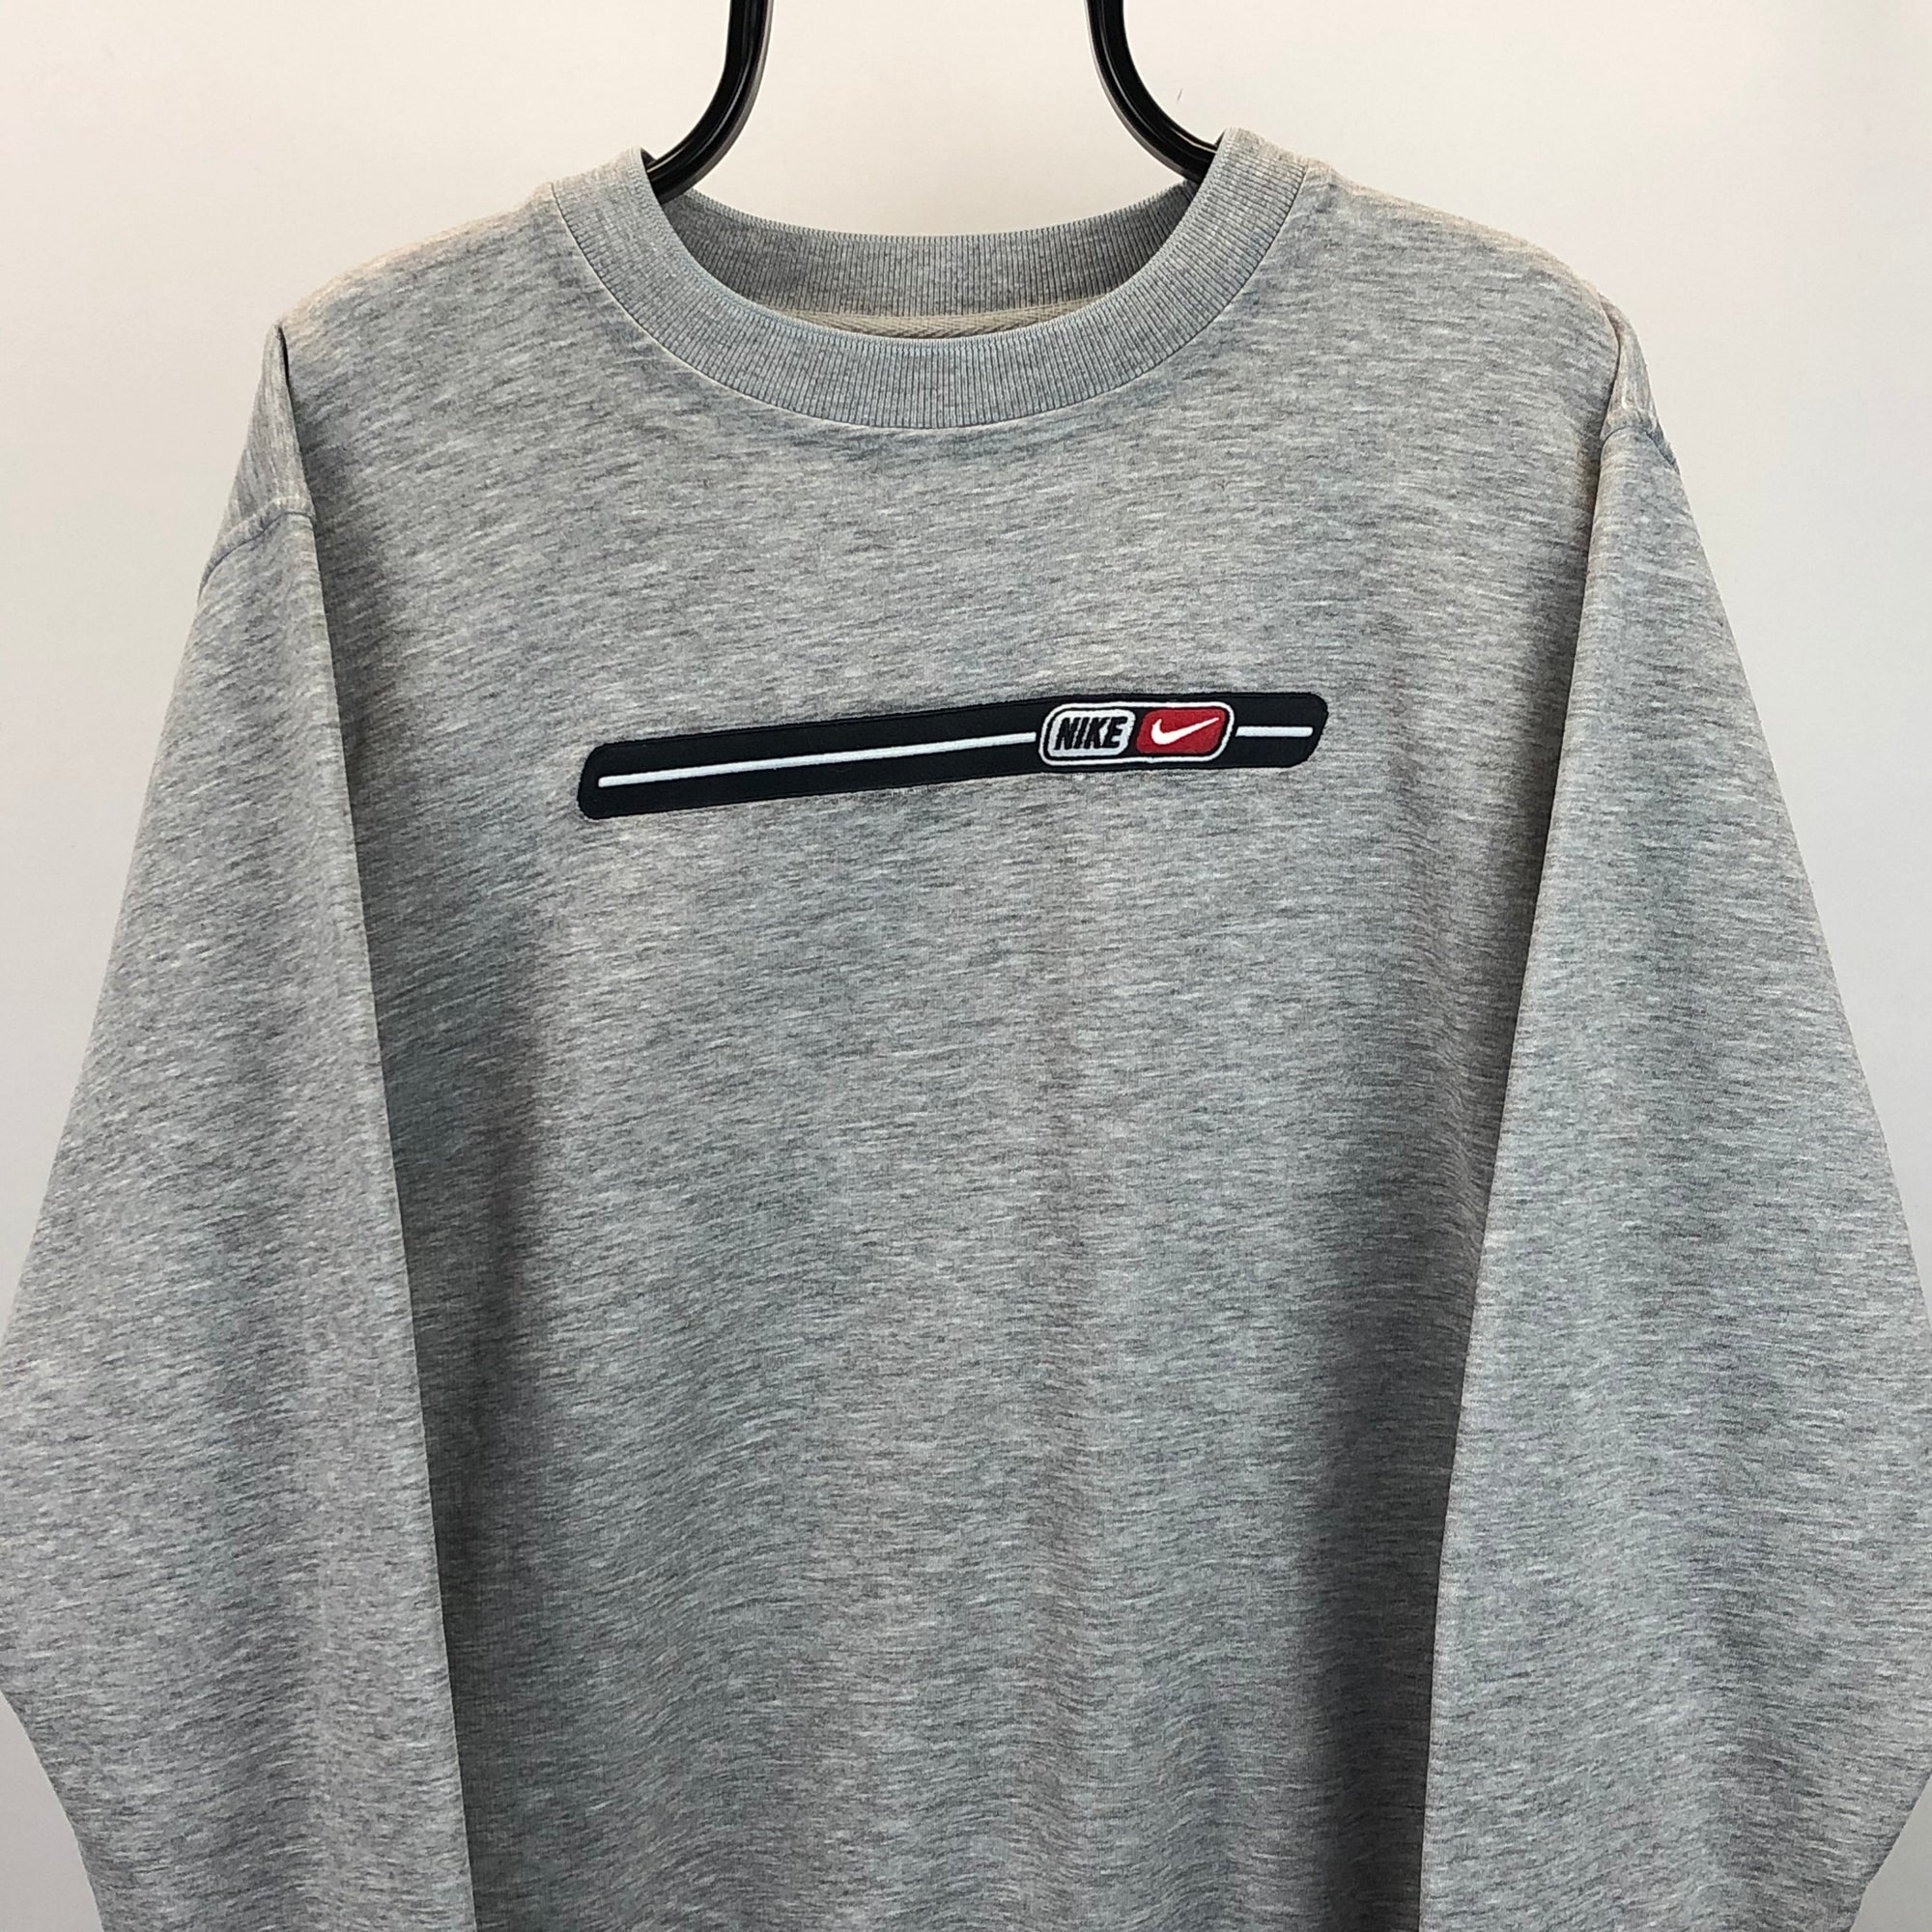 Vintage Nike Small Spellout Sweatshirt in Grey - Men's Medium/Women's Large